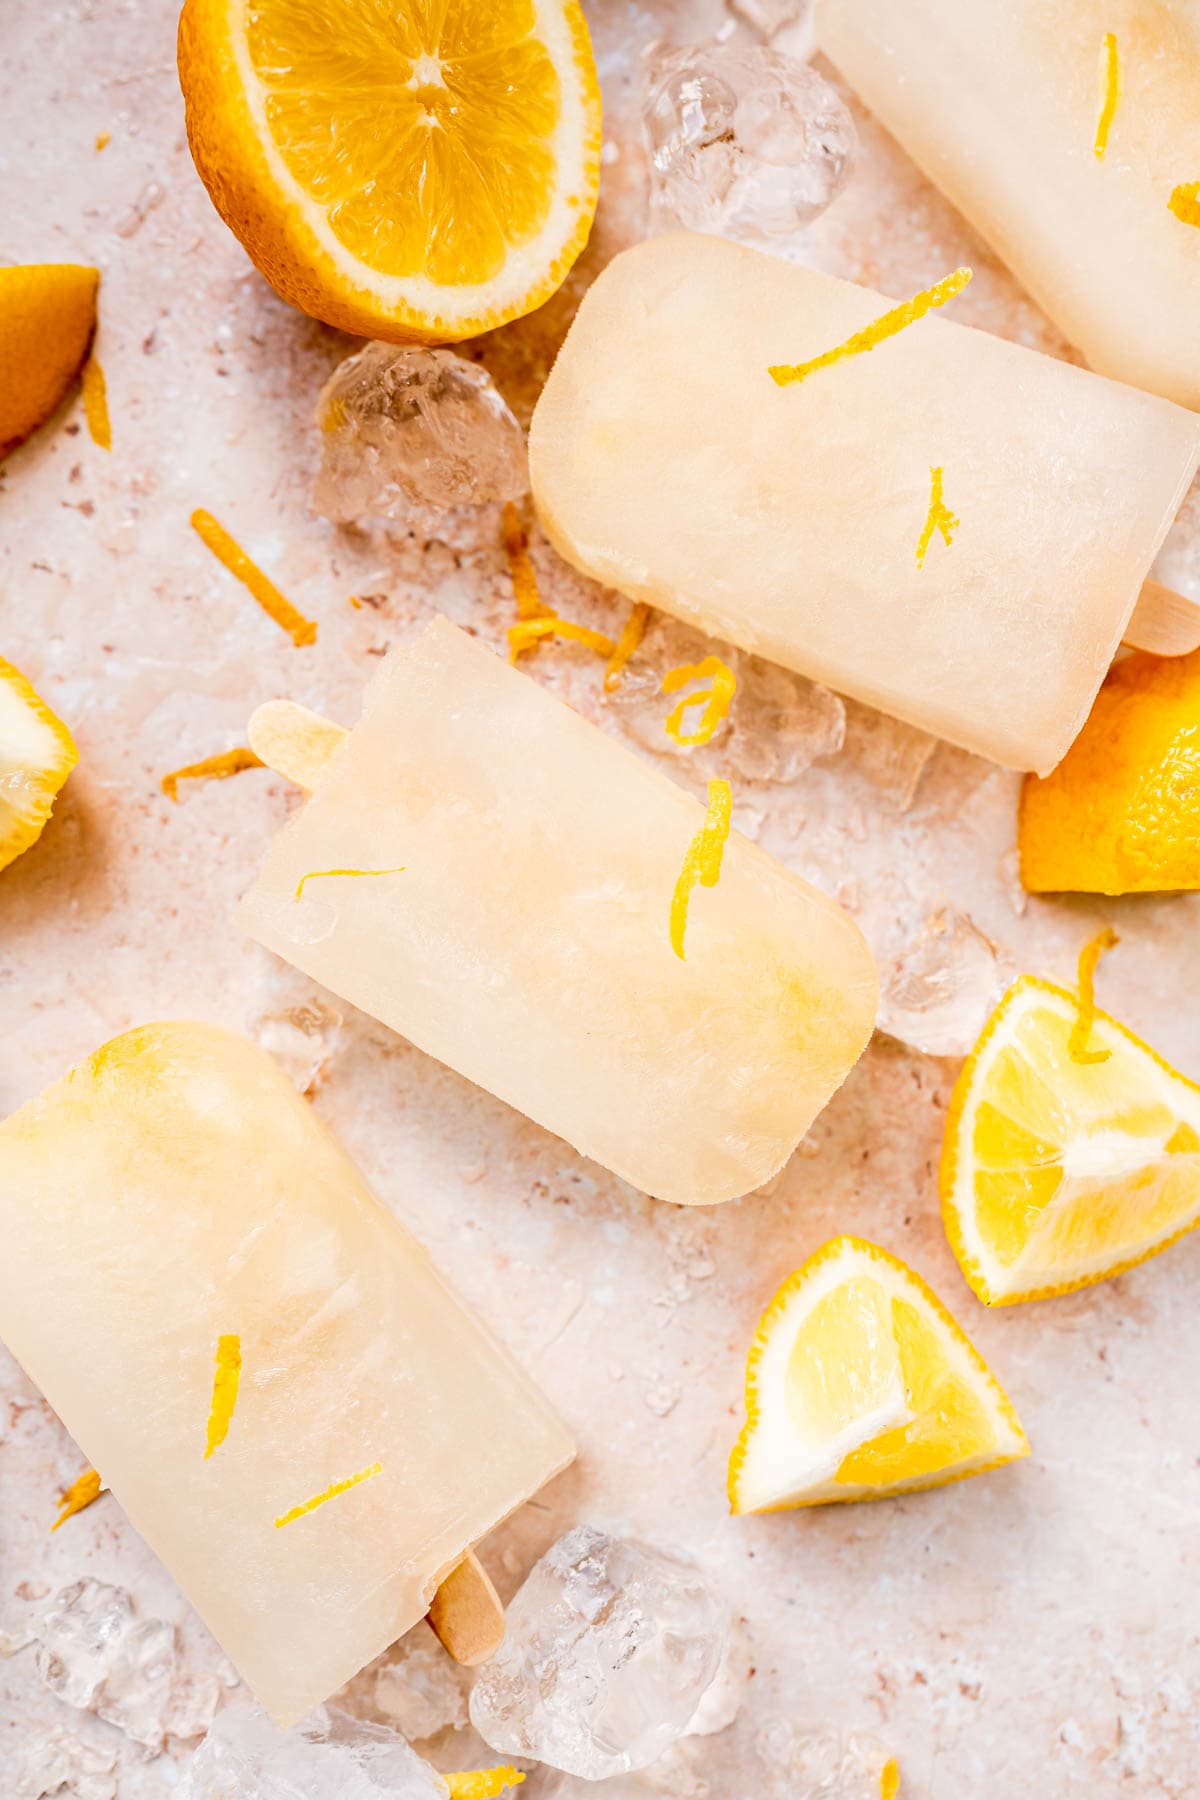 Homemade lemon ice pops resting on tan table garnished with fresh lemons.